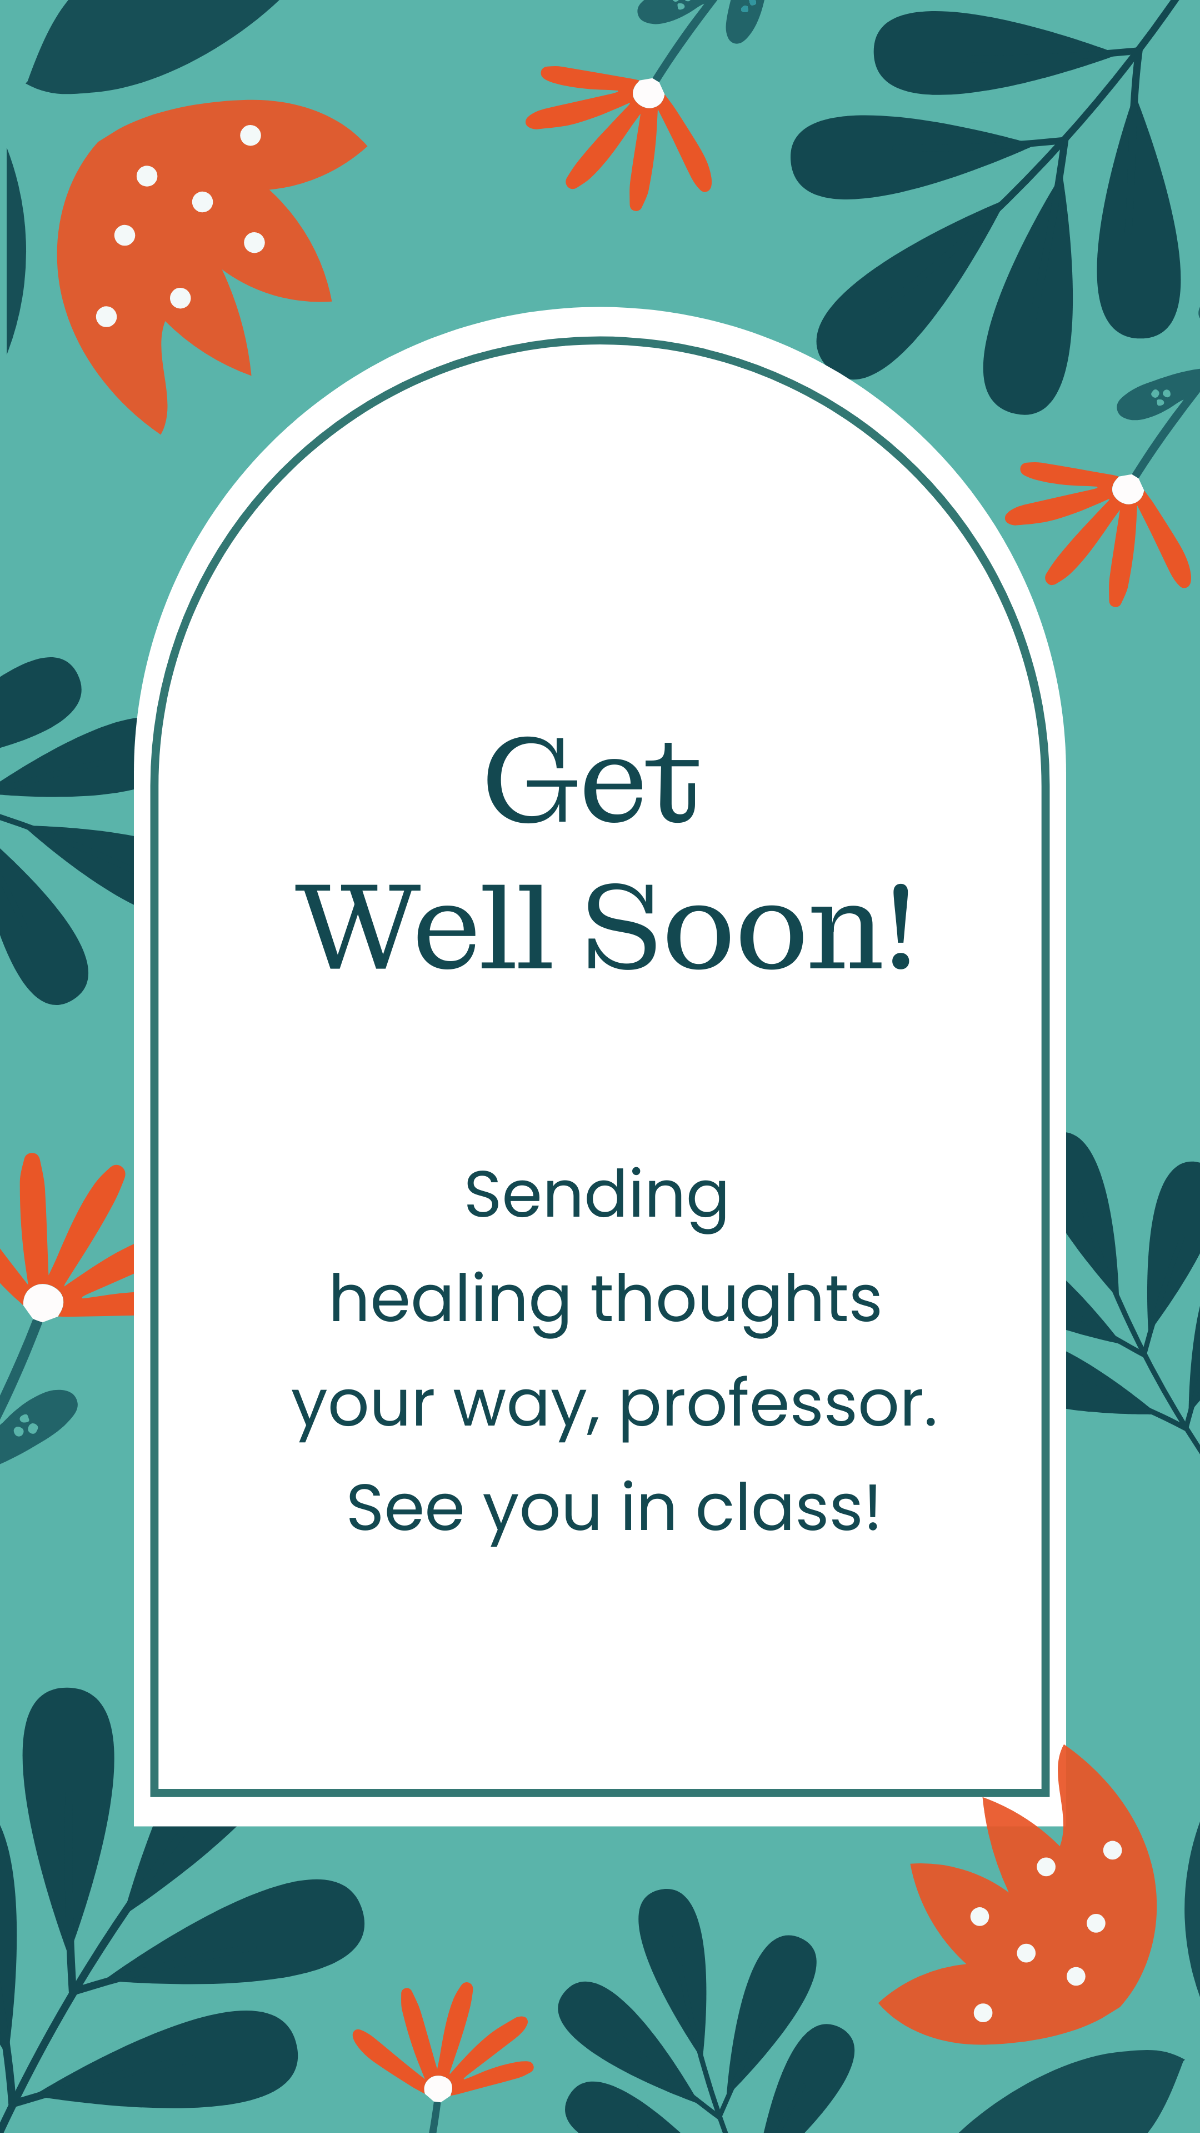 Get Well Soon Message For Professor